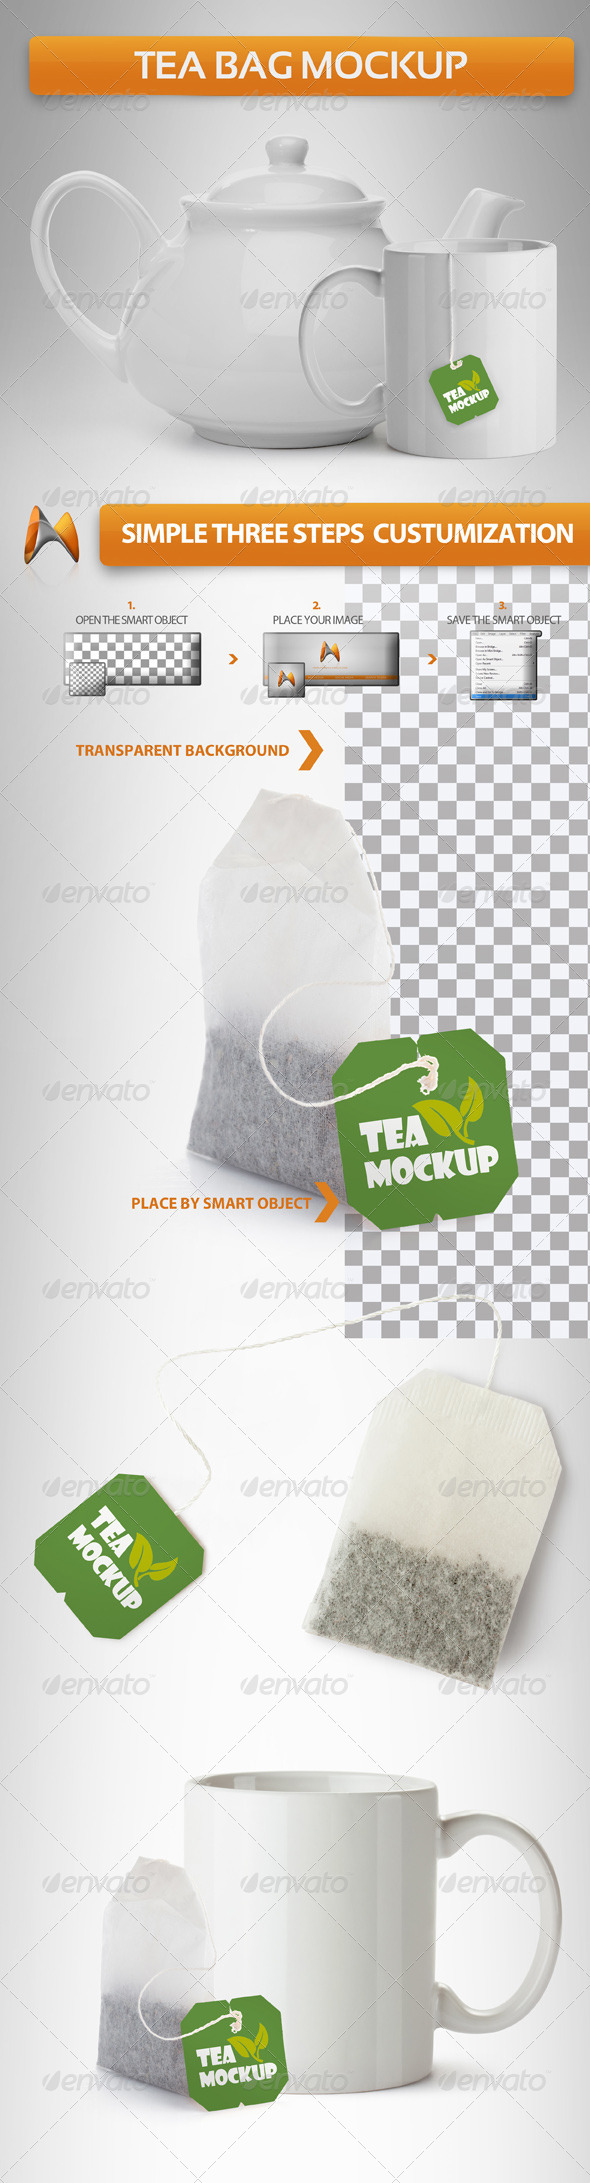 Download Tea Bag Mockup | GraphicRiver